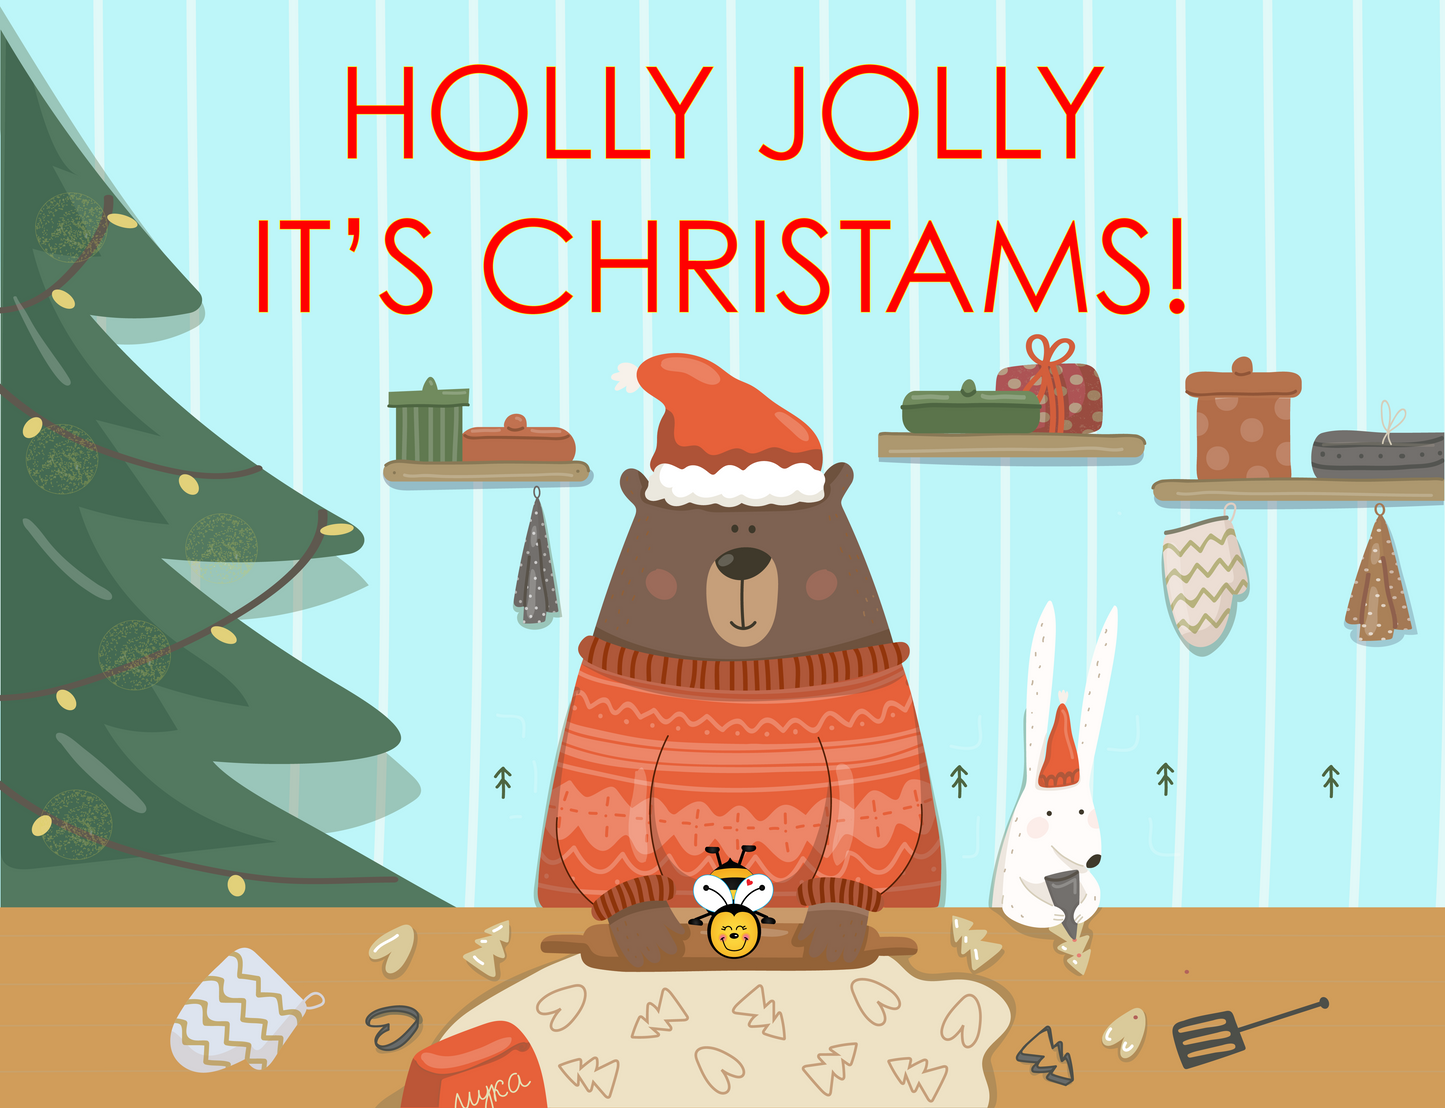 HOLLY JOLLY IT’S CHRISTMAS!